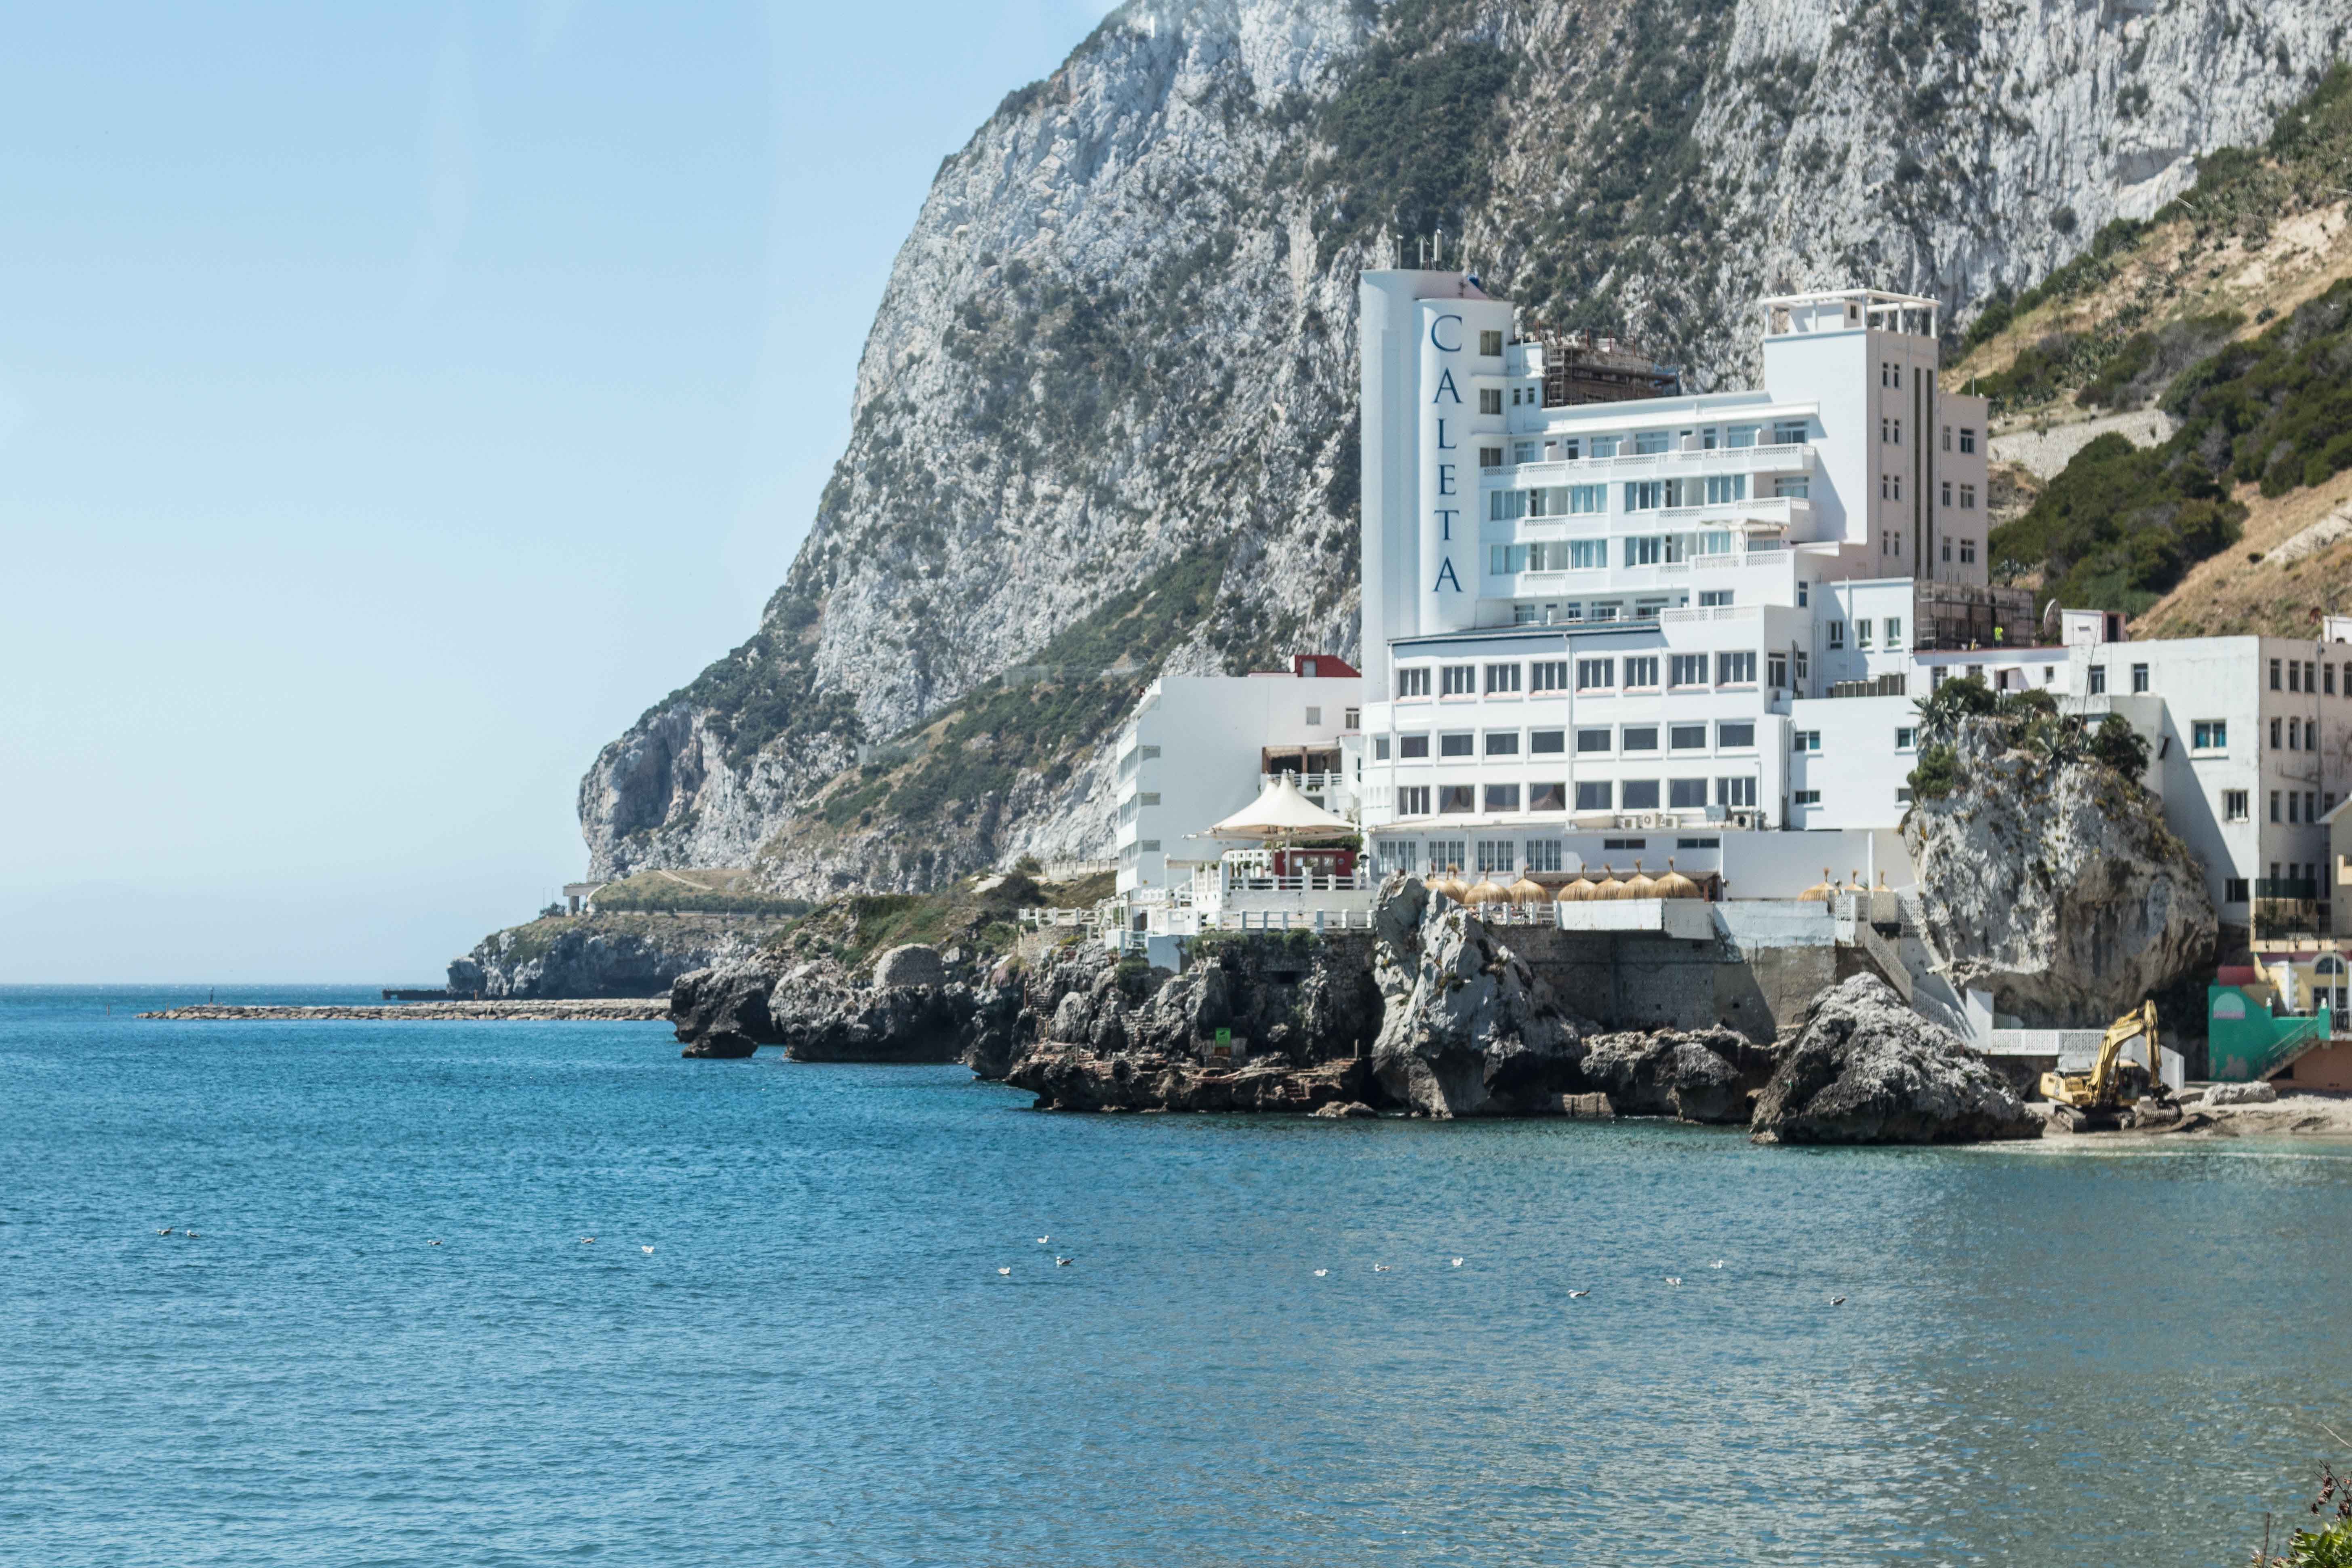 Mediterranean Cruise: Gibraltar, UK | https://www.roseclearfield.com